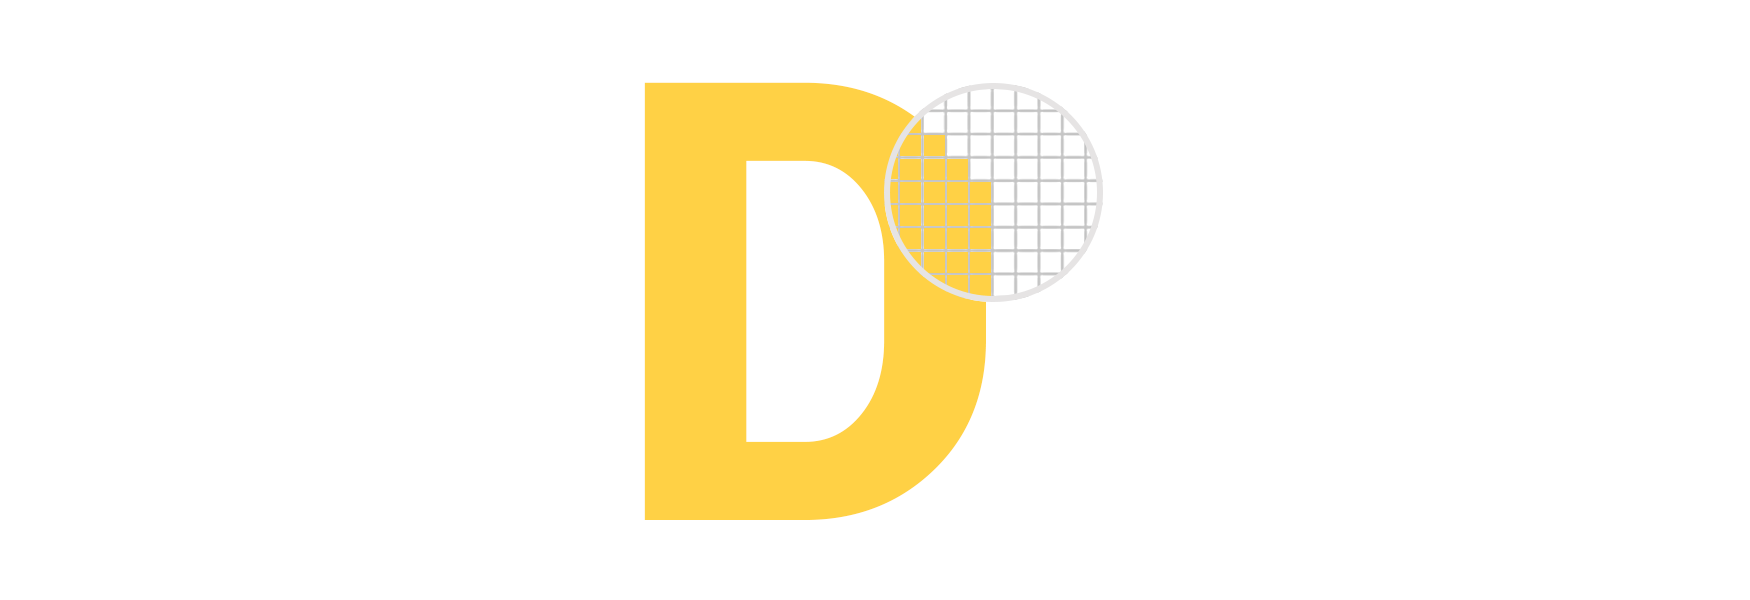 Designagentur-Stuttgart-Kreativbetrieb-Design-Lexikon-DPI-1